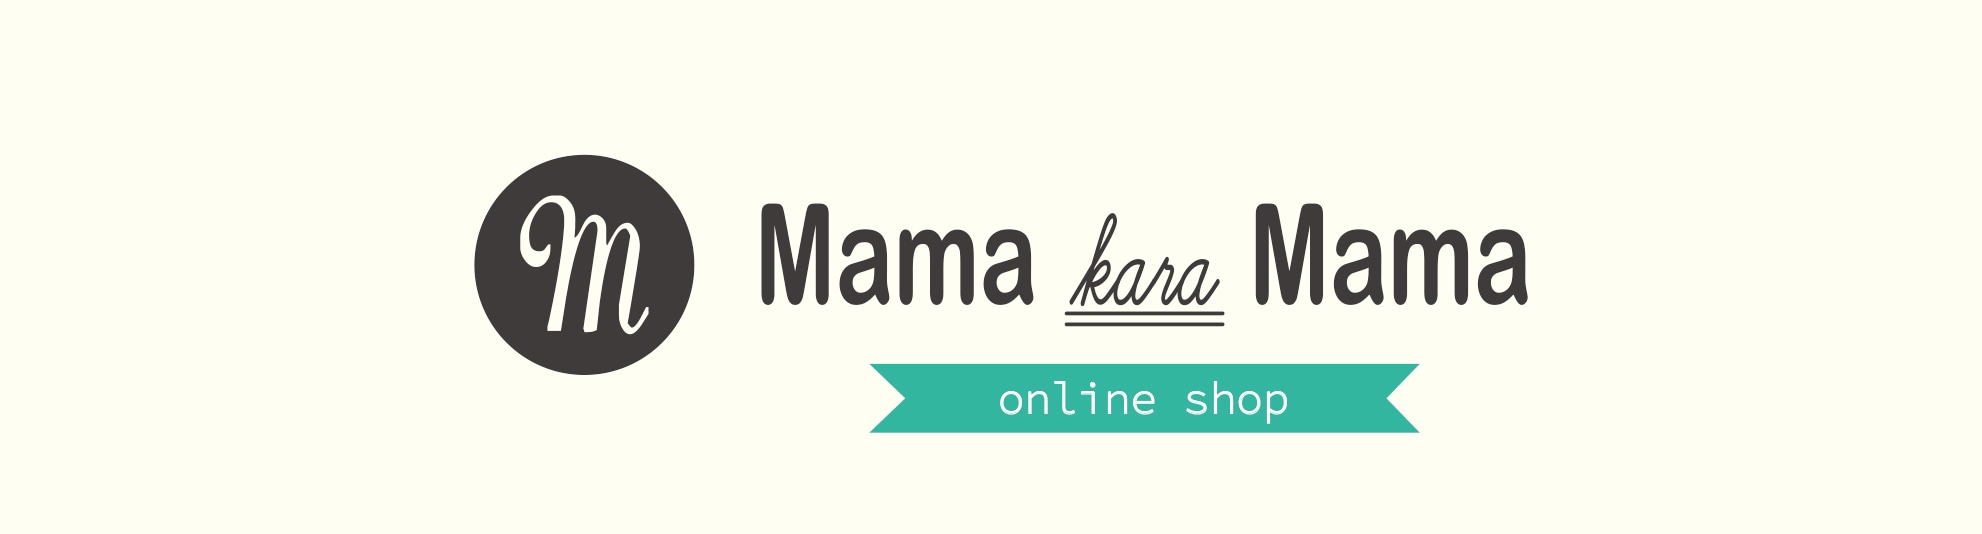 mamakaramama-onlineshop